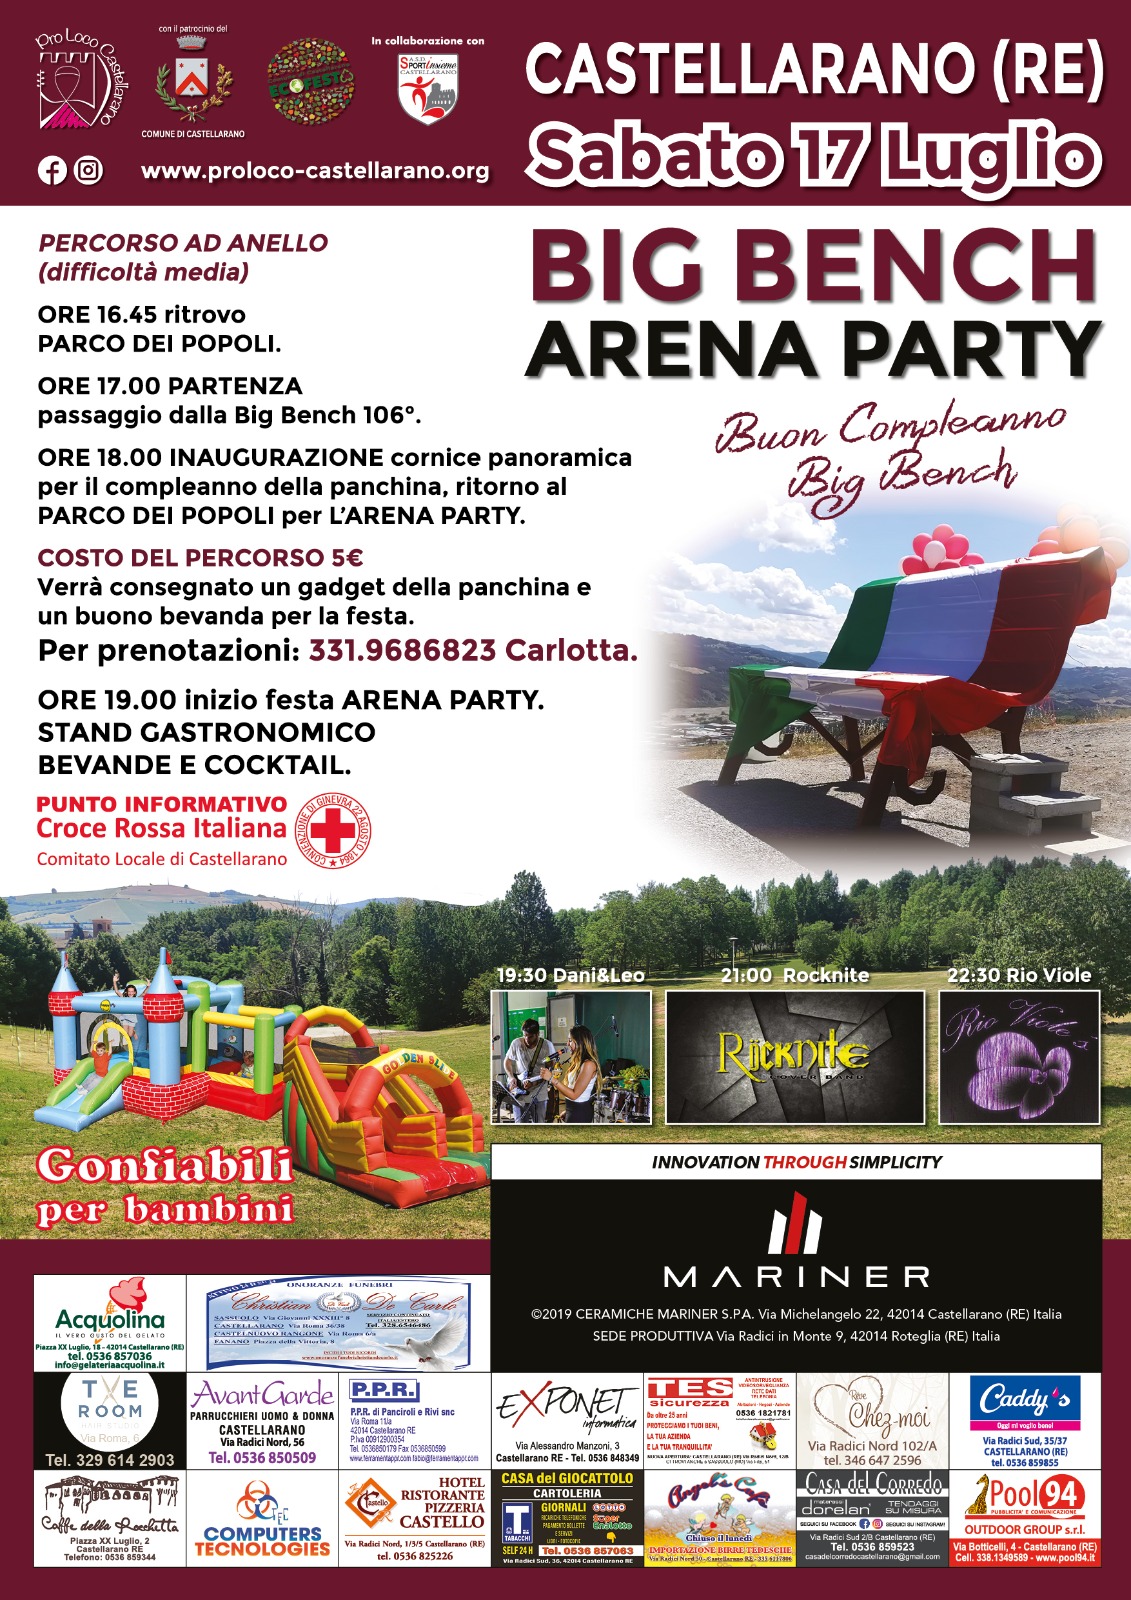 Big Bench Arena Party